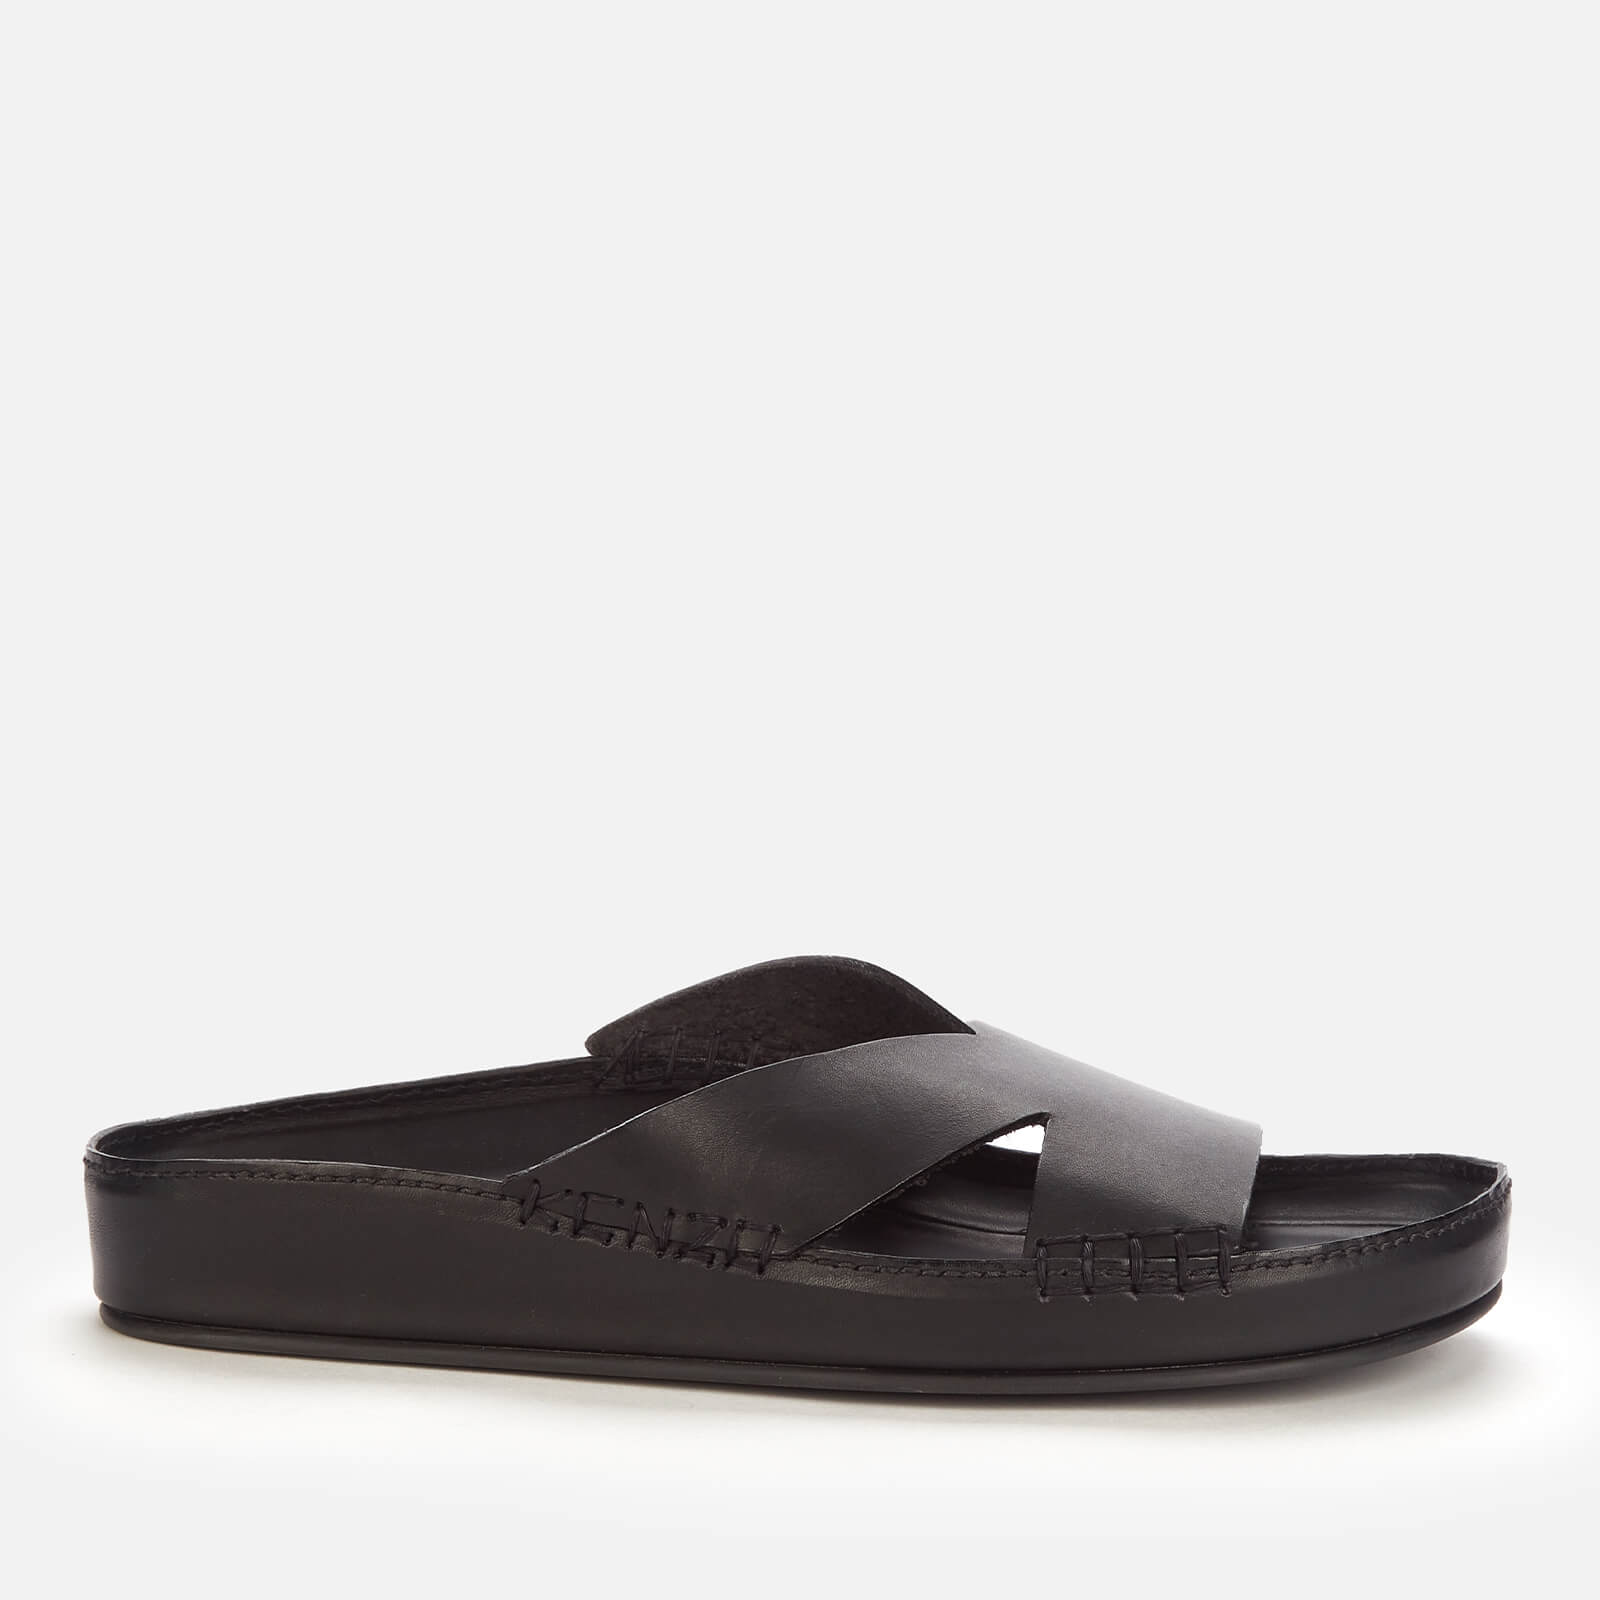 KENZO Men's Opanka Leather Mule Sandals - Black - UK 7